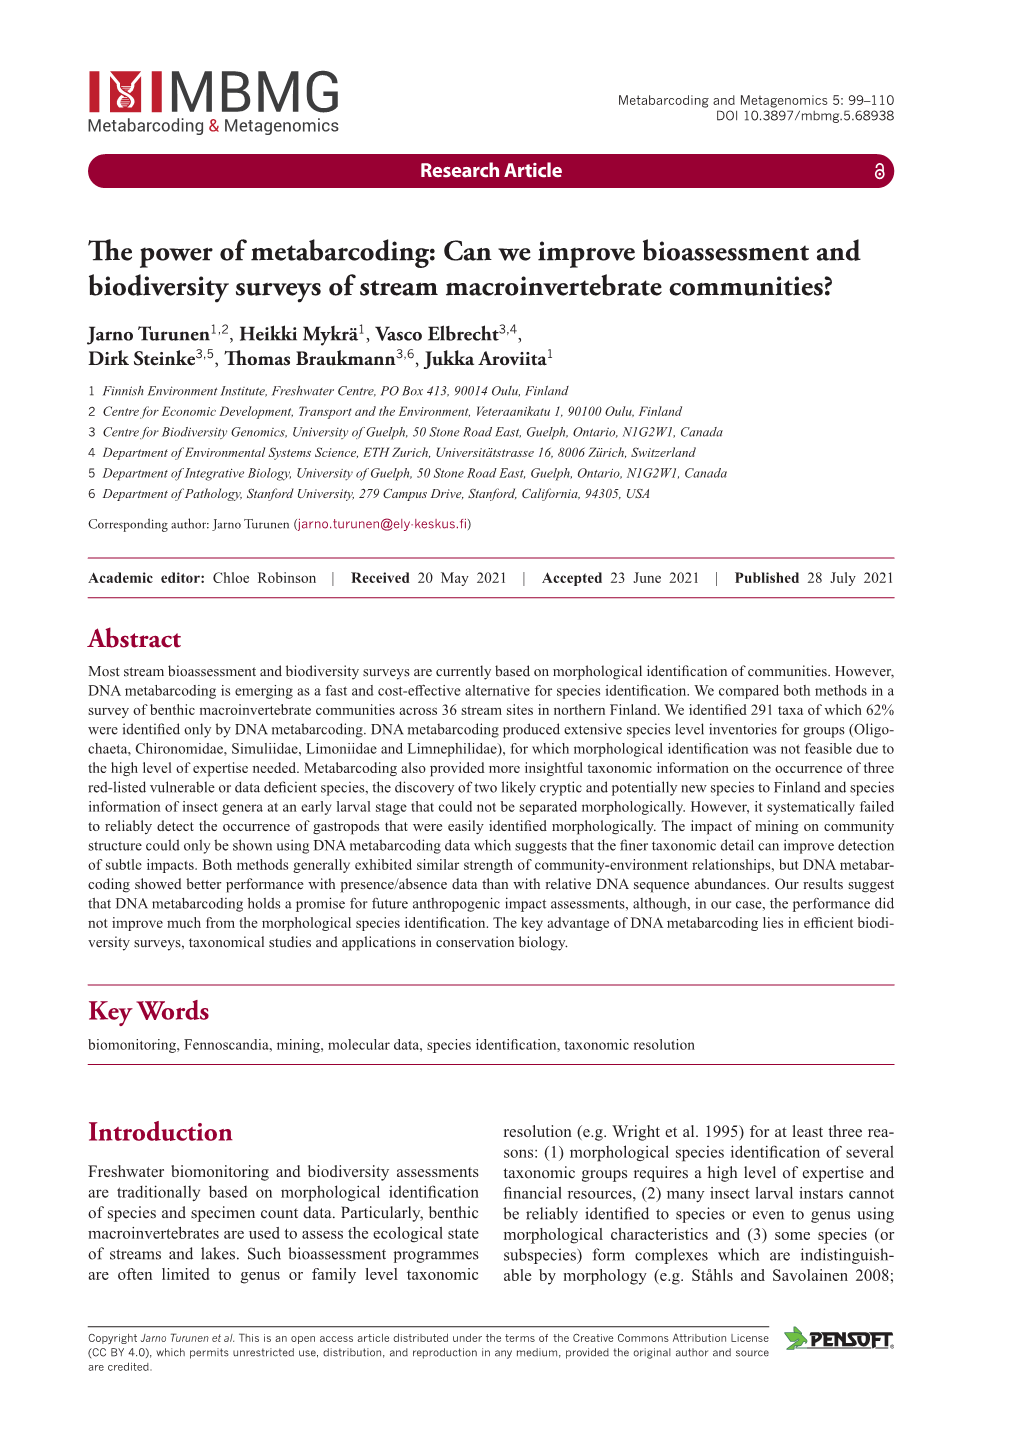 The Power of Metabarcoding: Can We Improve Bioassessment and Biodiversity Surveys of Stream Macroinvertebrate Communities?